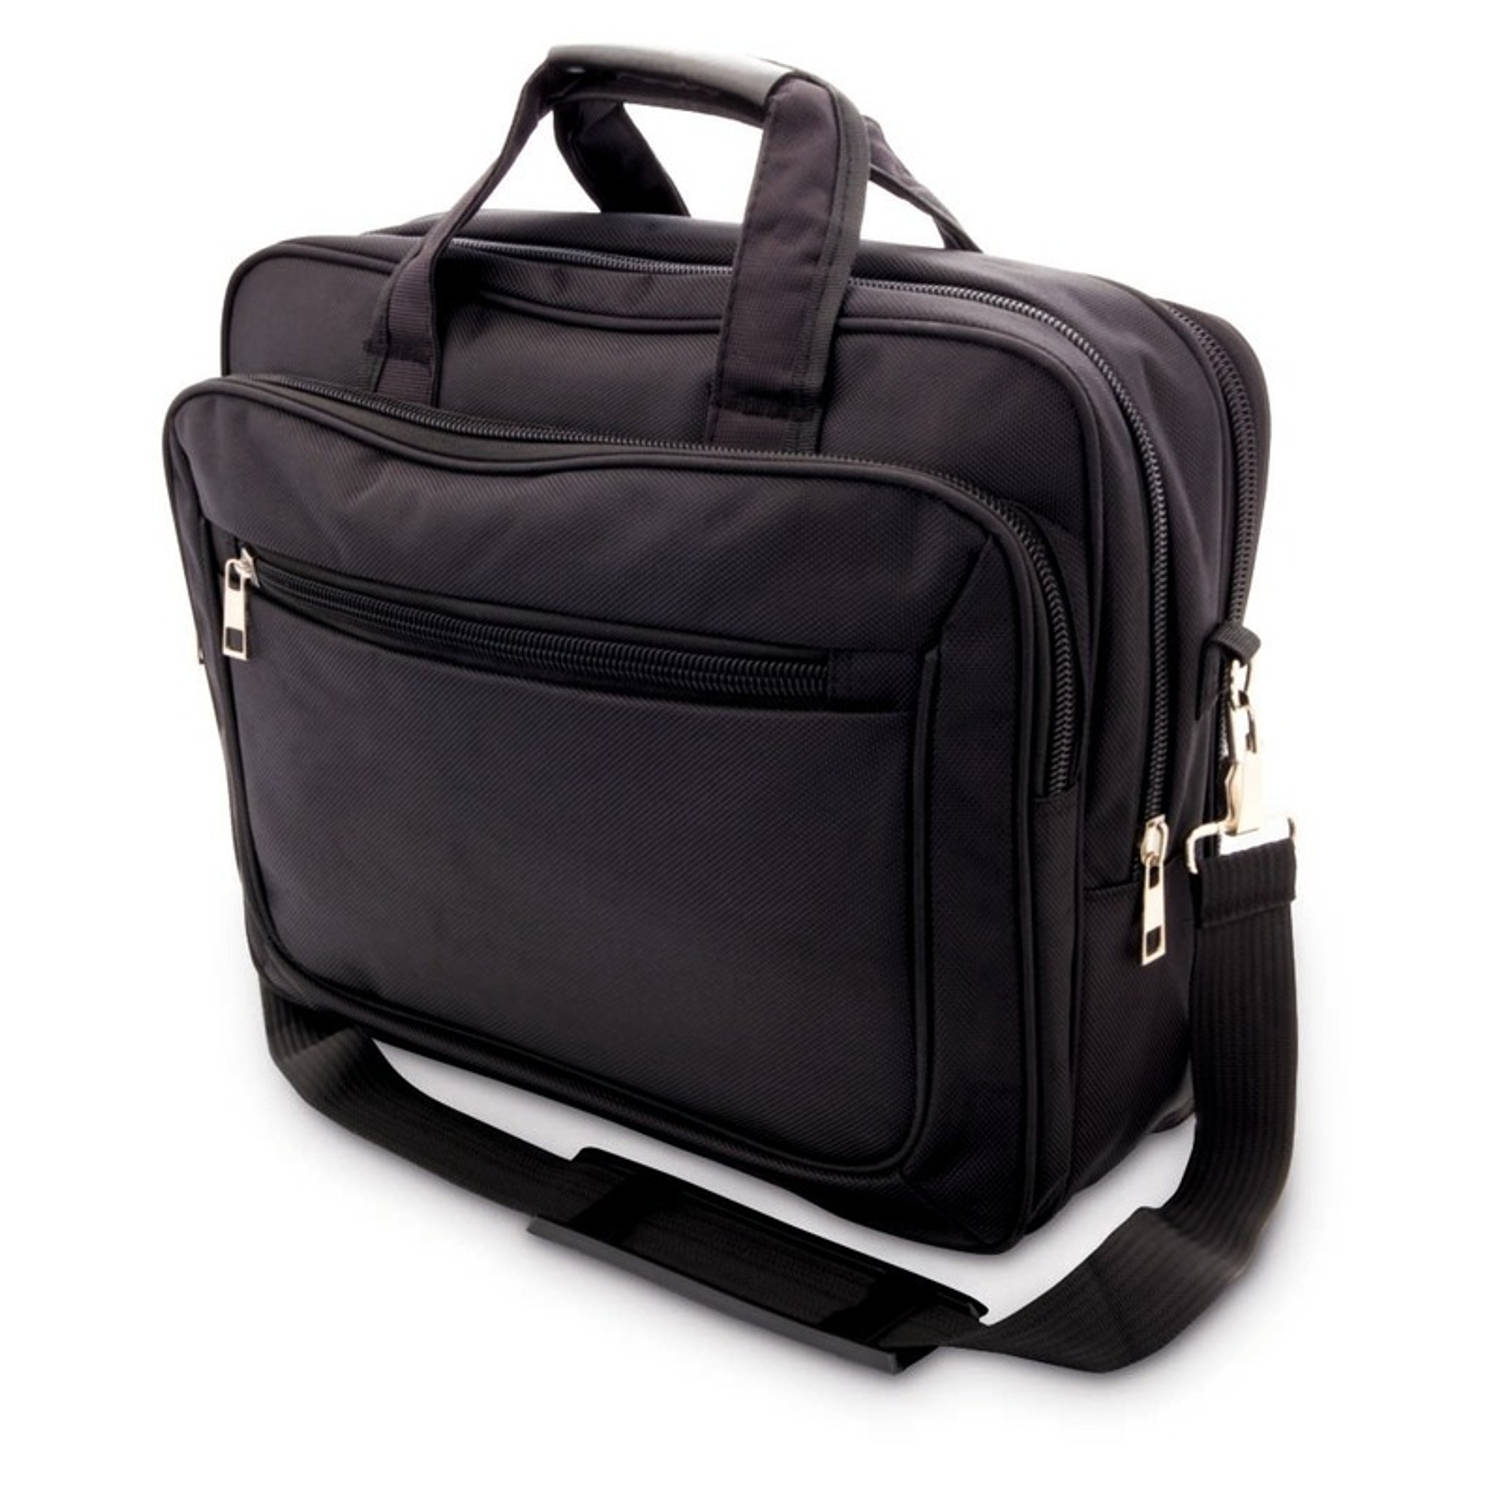 Aktetas-laptoptas 15,6 inch zwart 20 liter Zakelijke schoudertassen